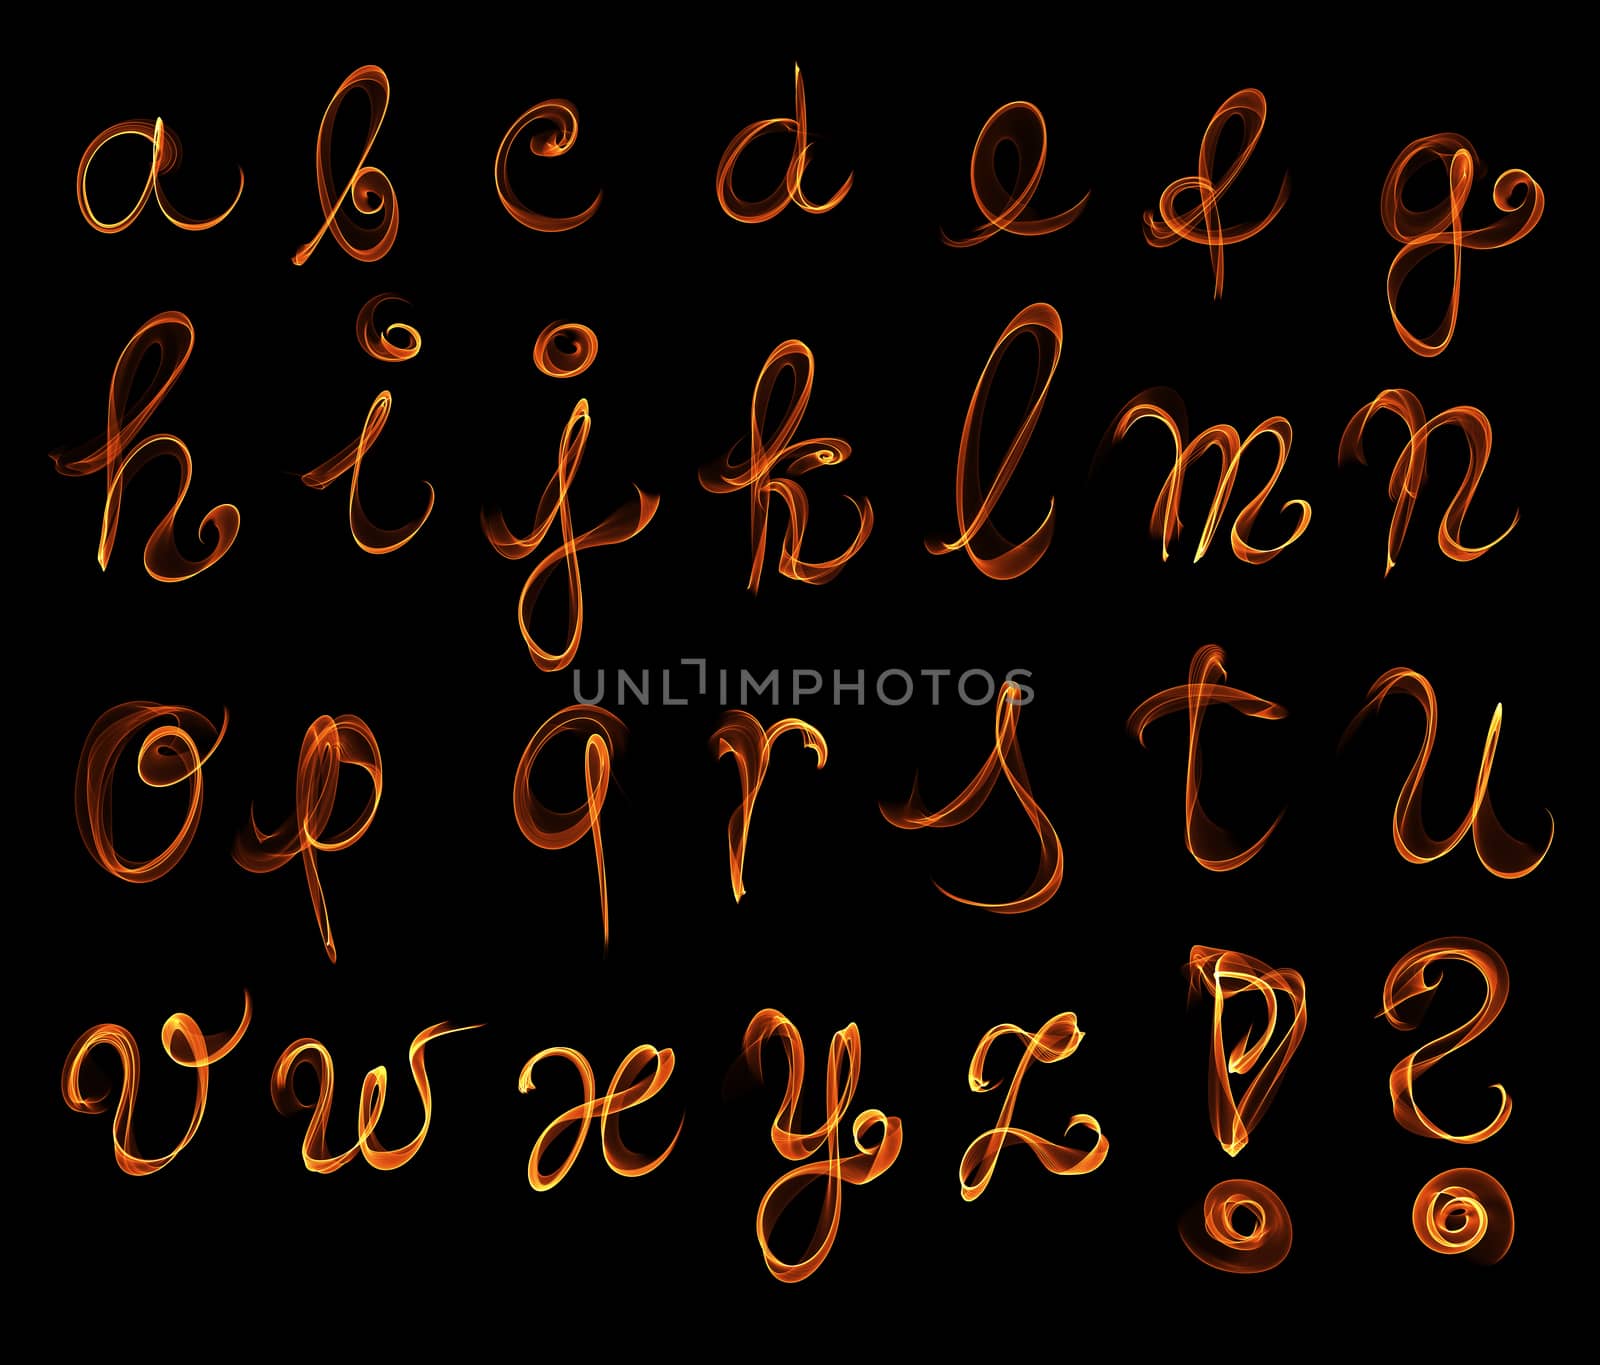 The fire english alphabet set on black background.